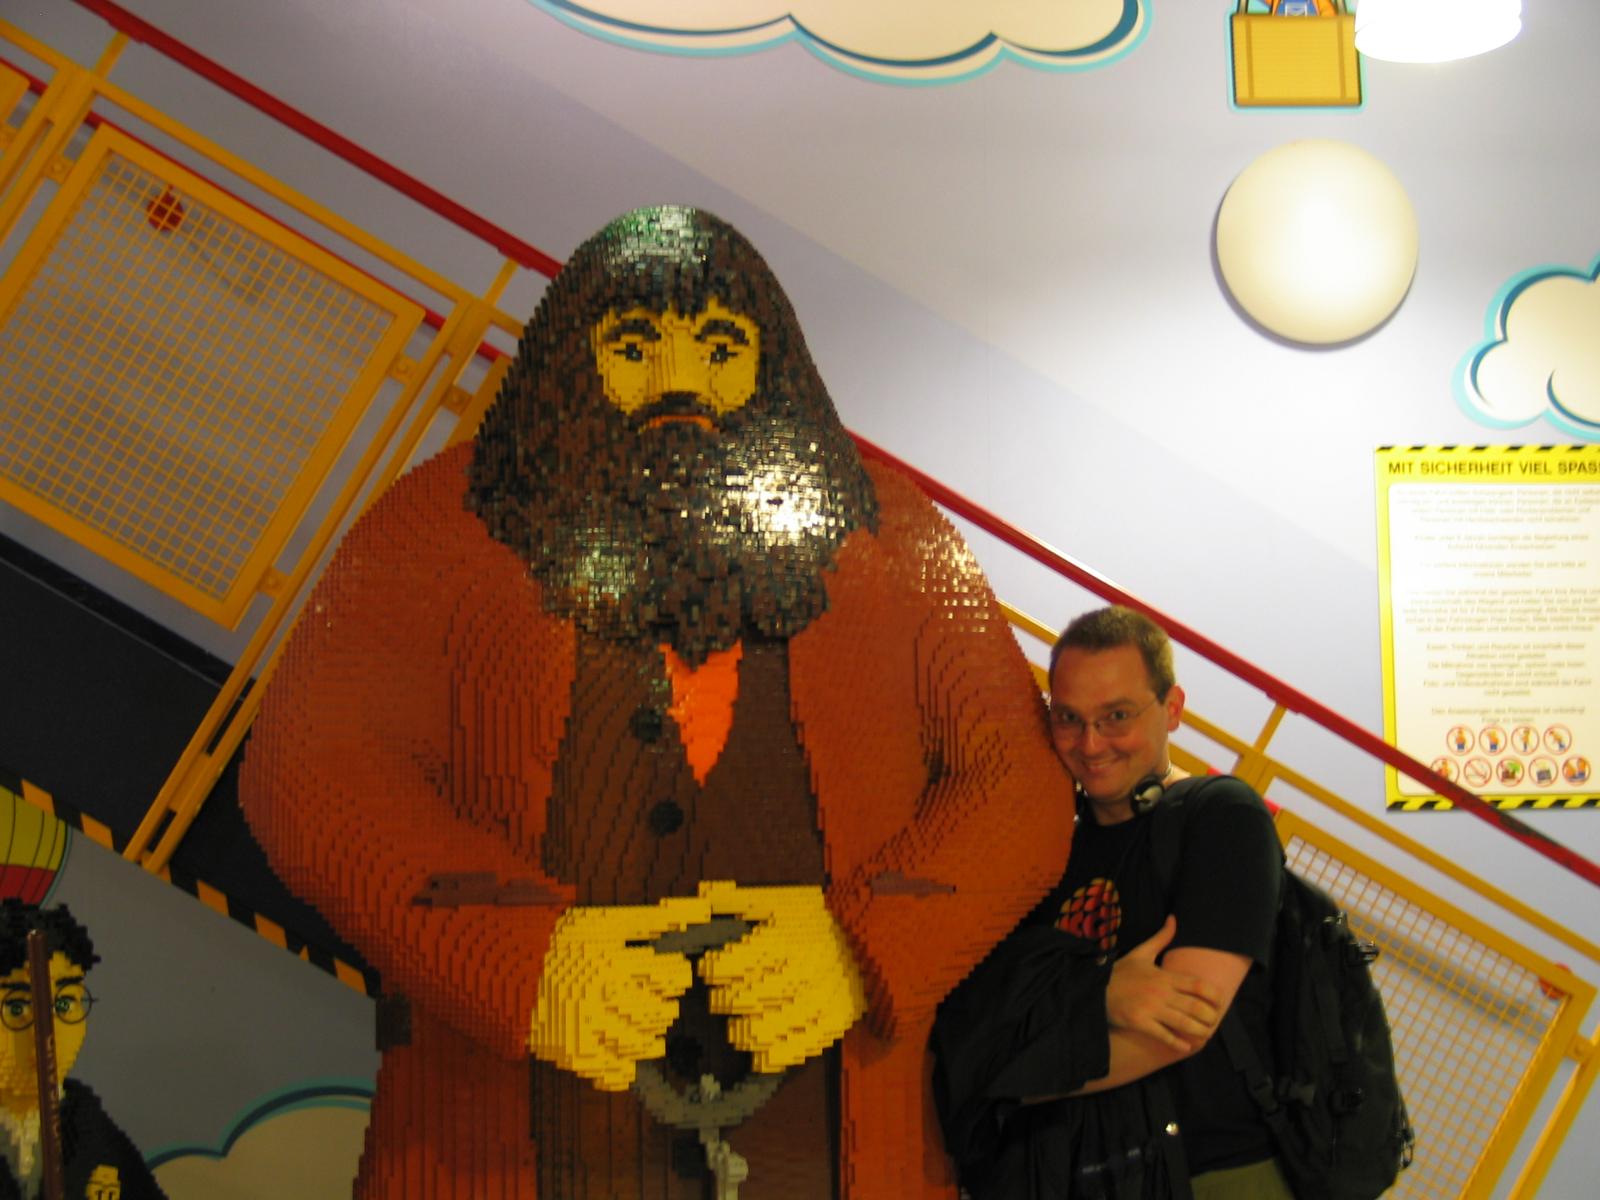 Lego Hagrid and me